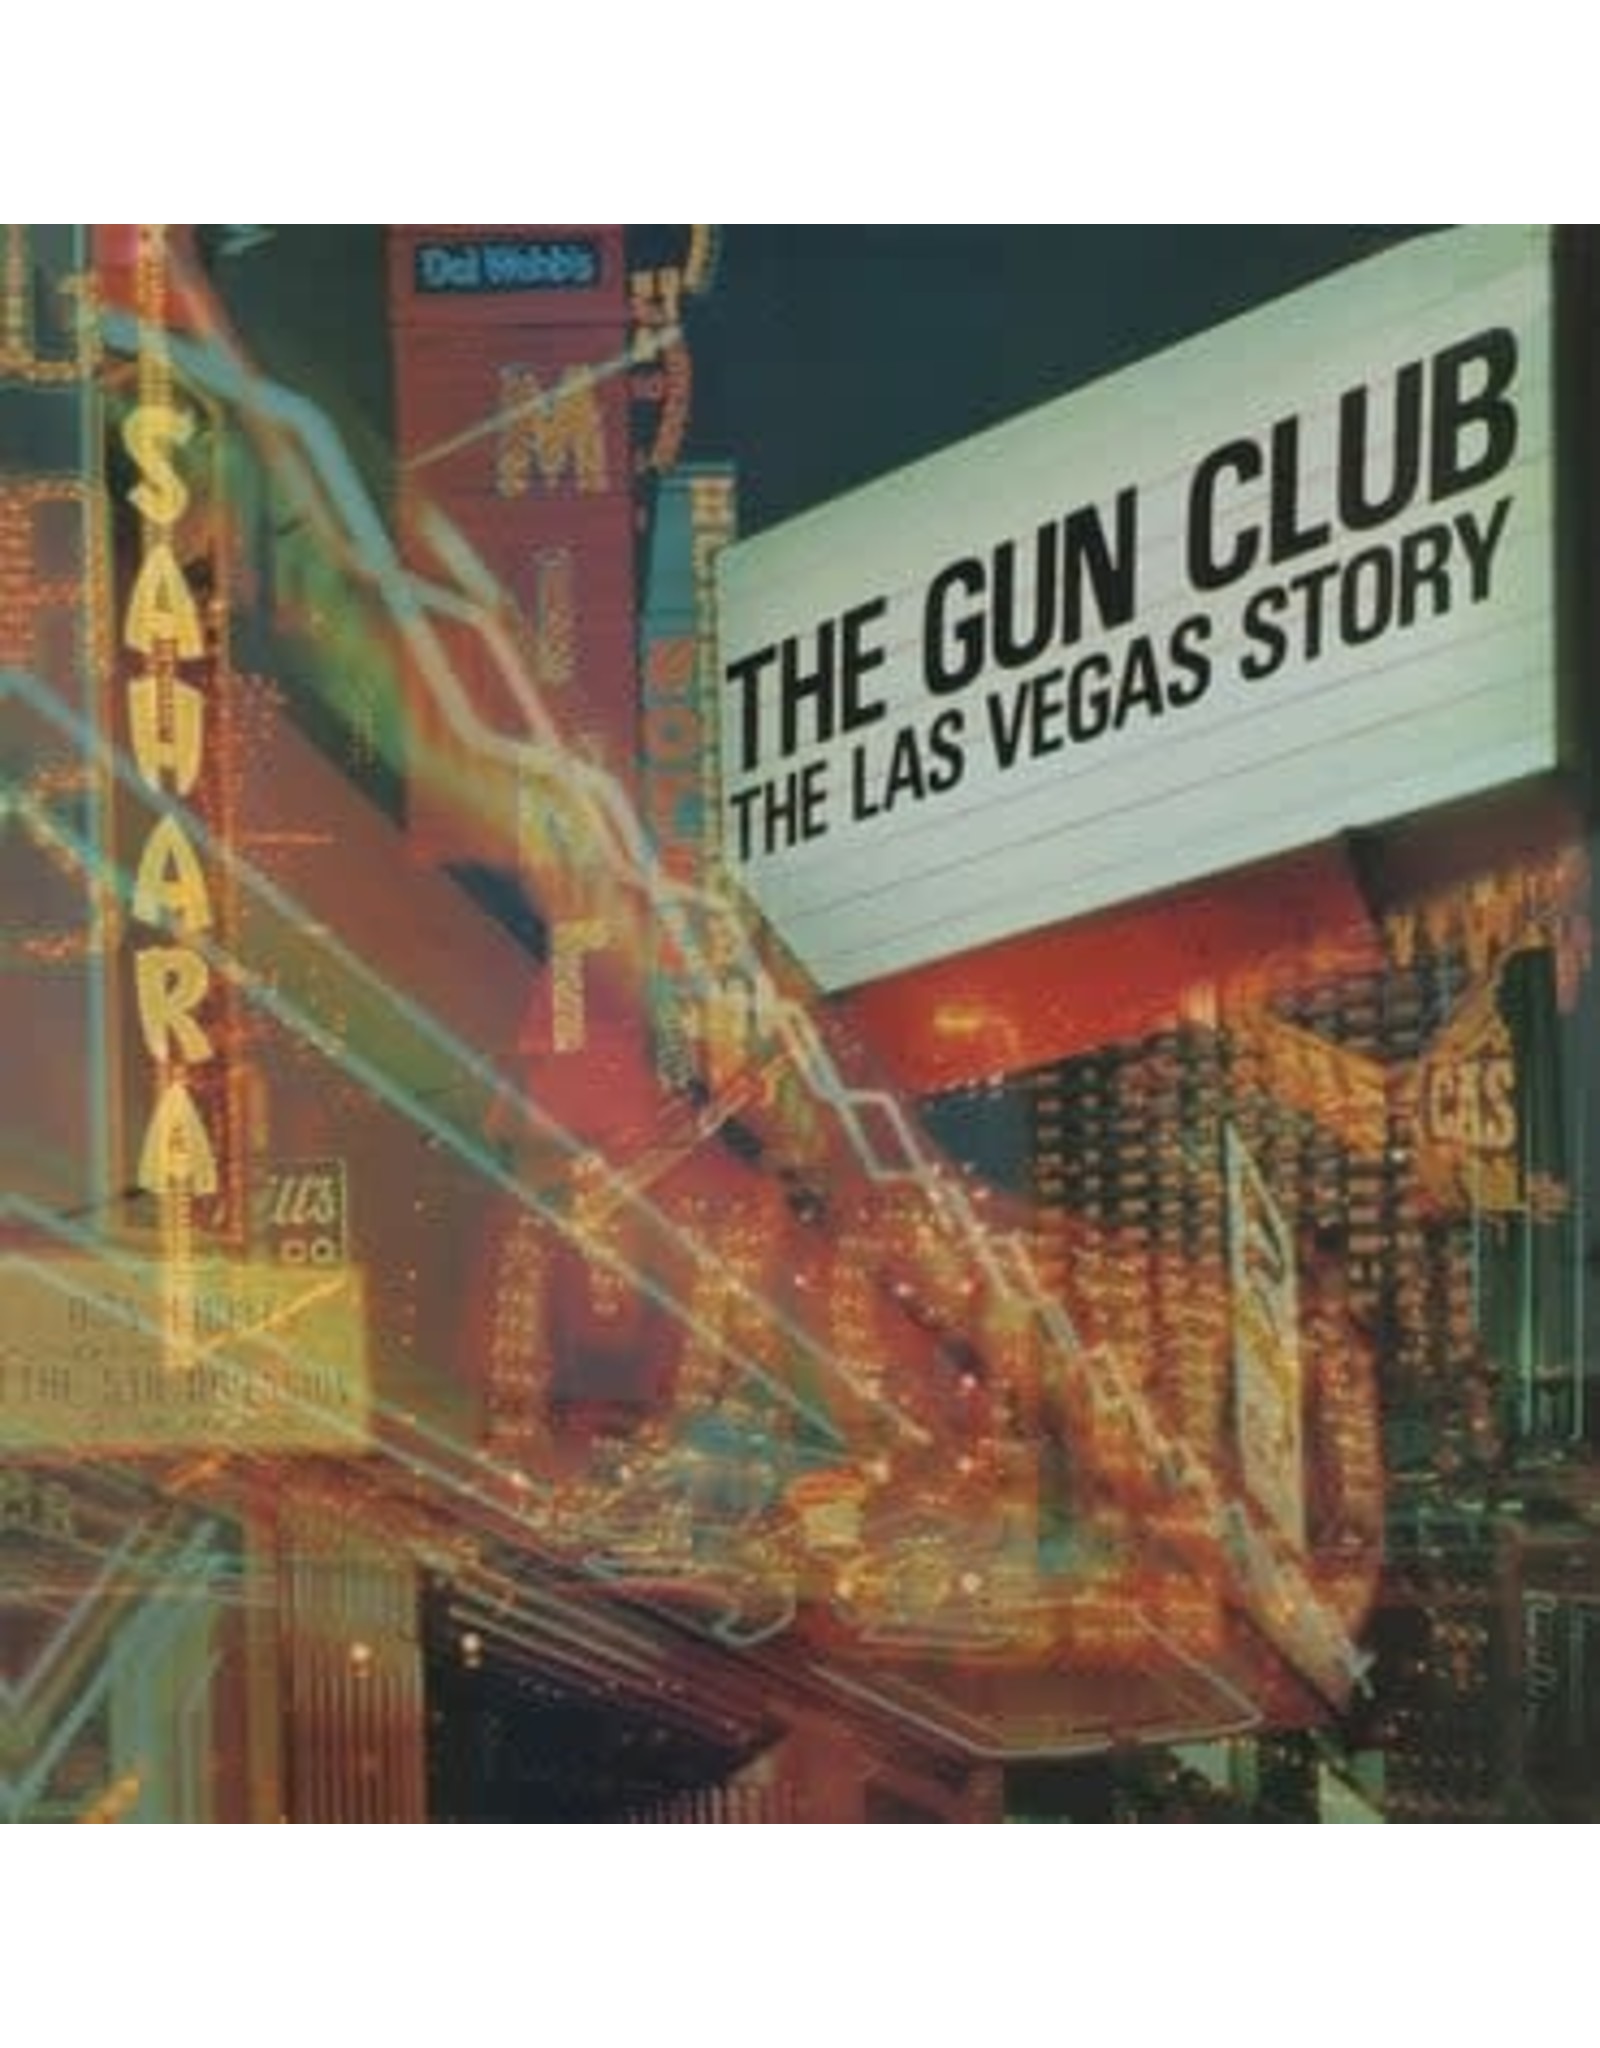 Blixa Sound Gun Club: The Las Vegas Story (super deluxe edition) LP